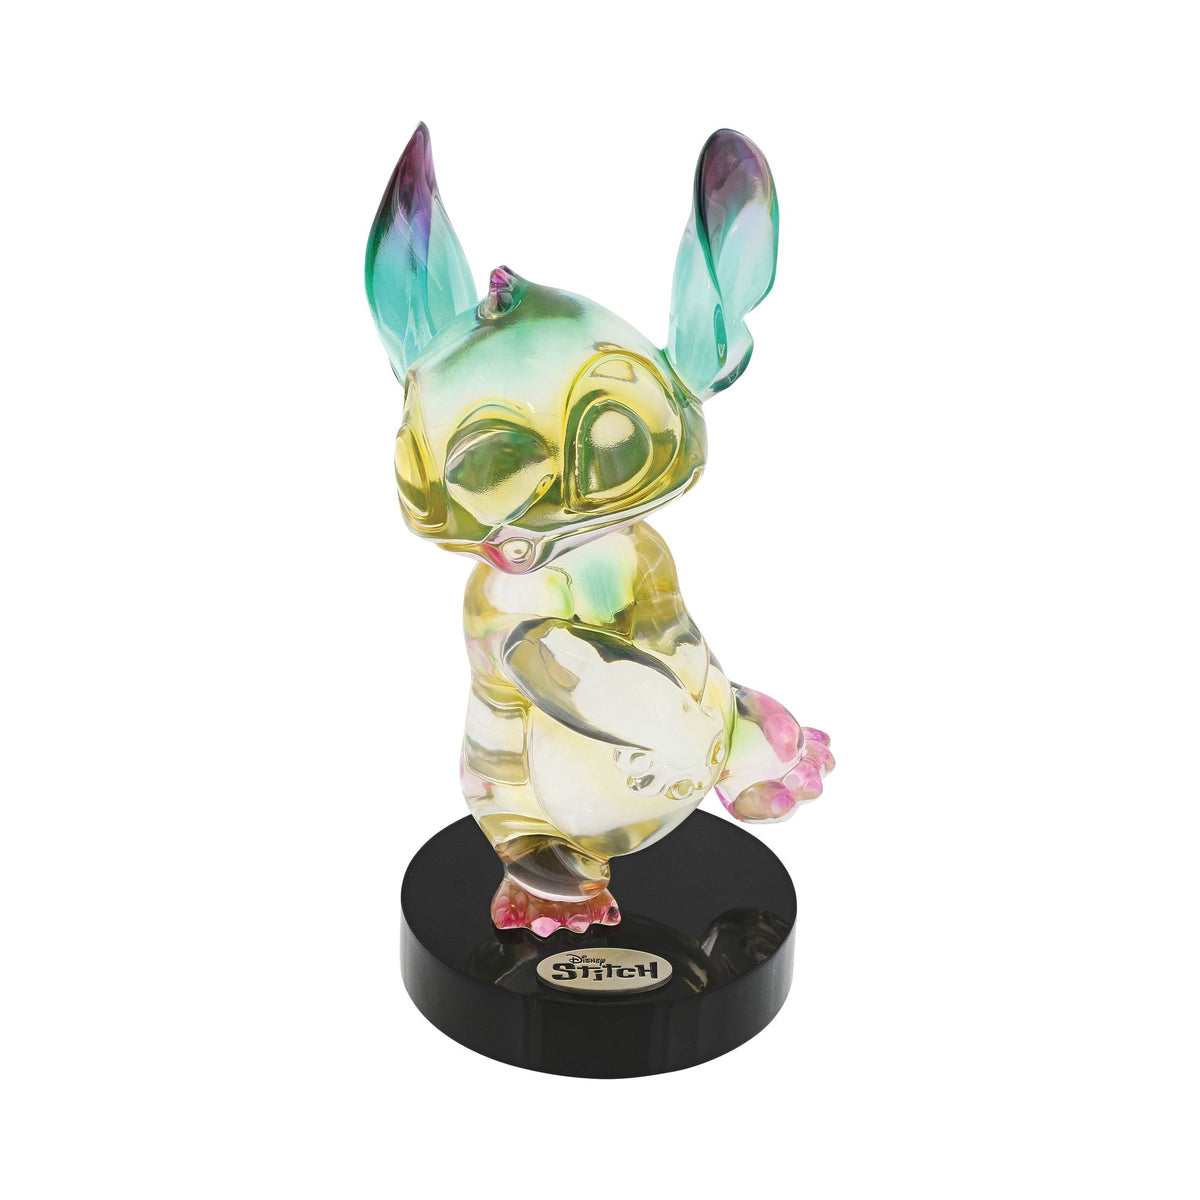 Rainbow Stitch NLE 1,000 — Enesco Gift Shop